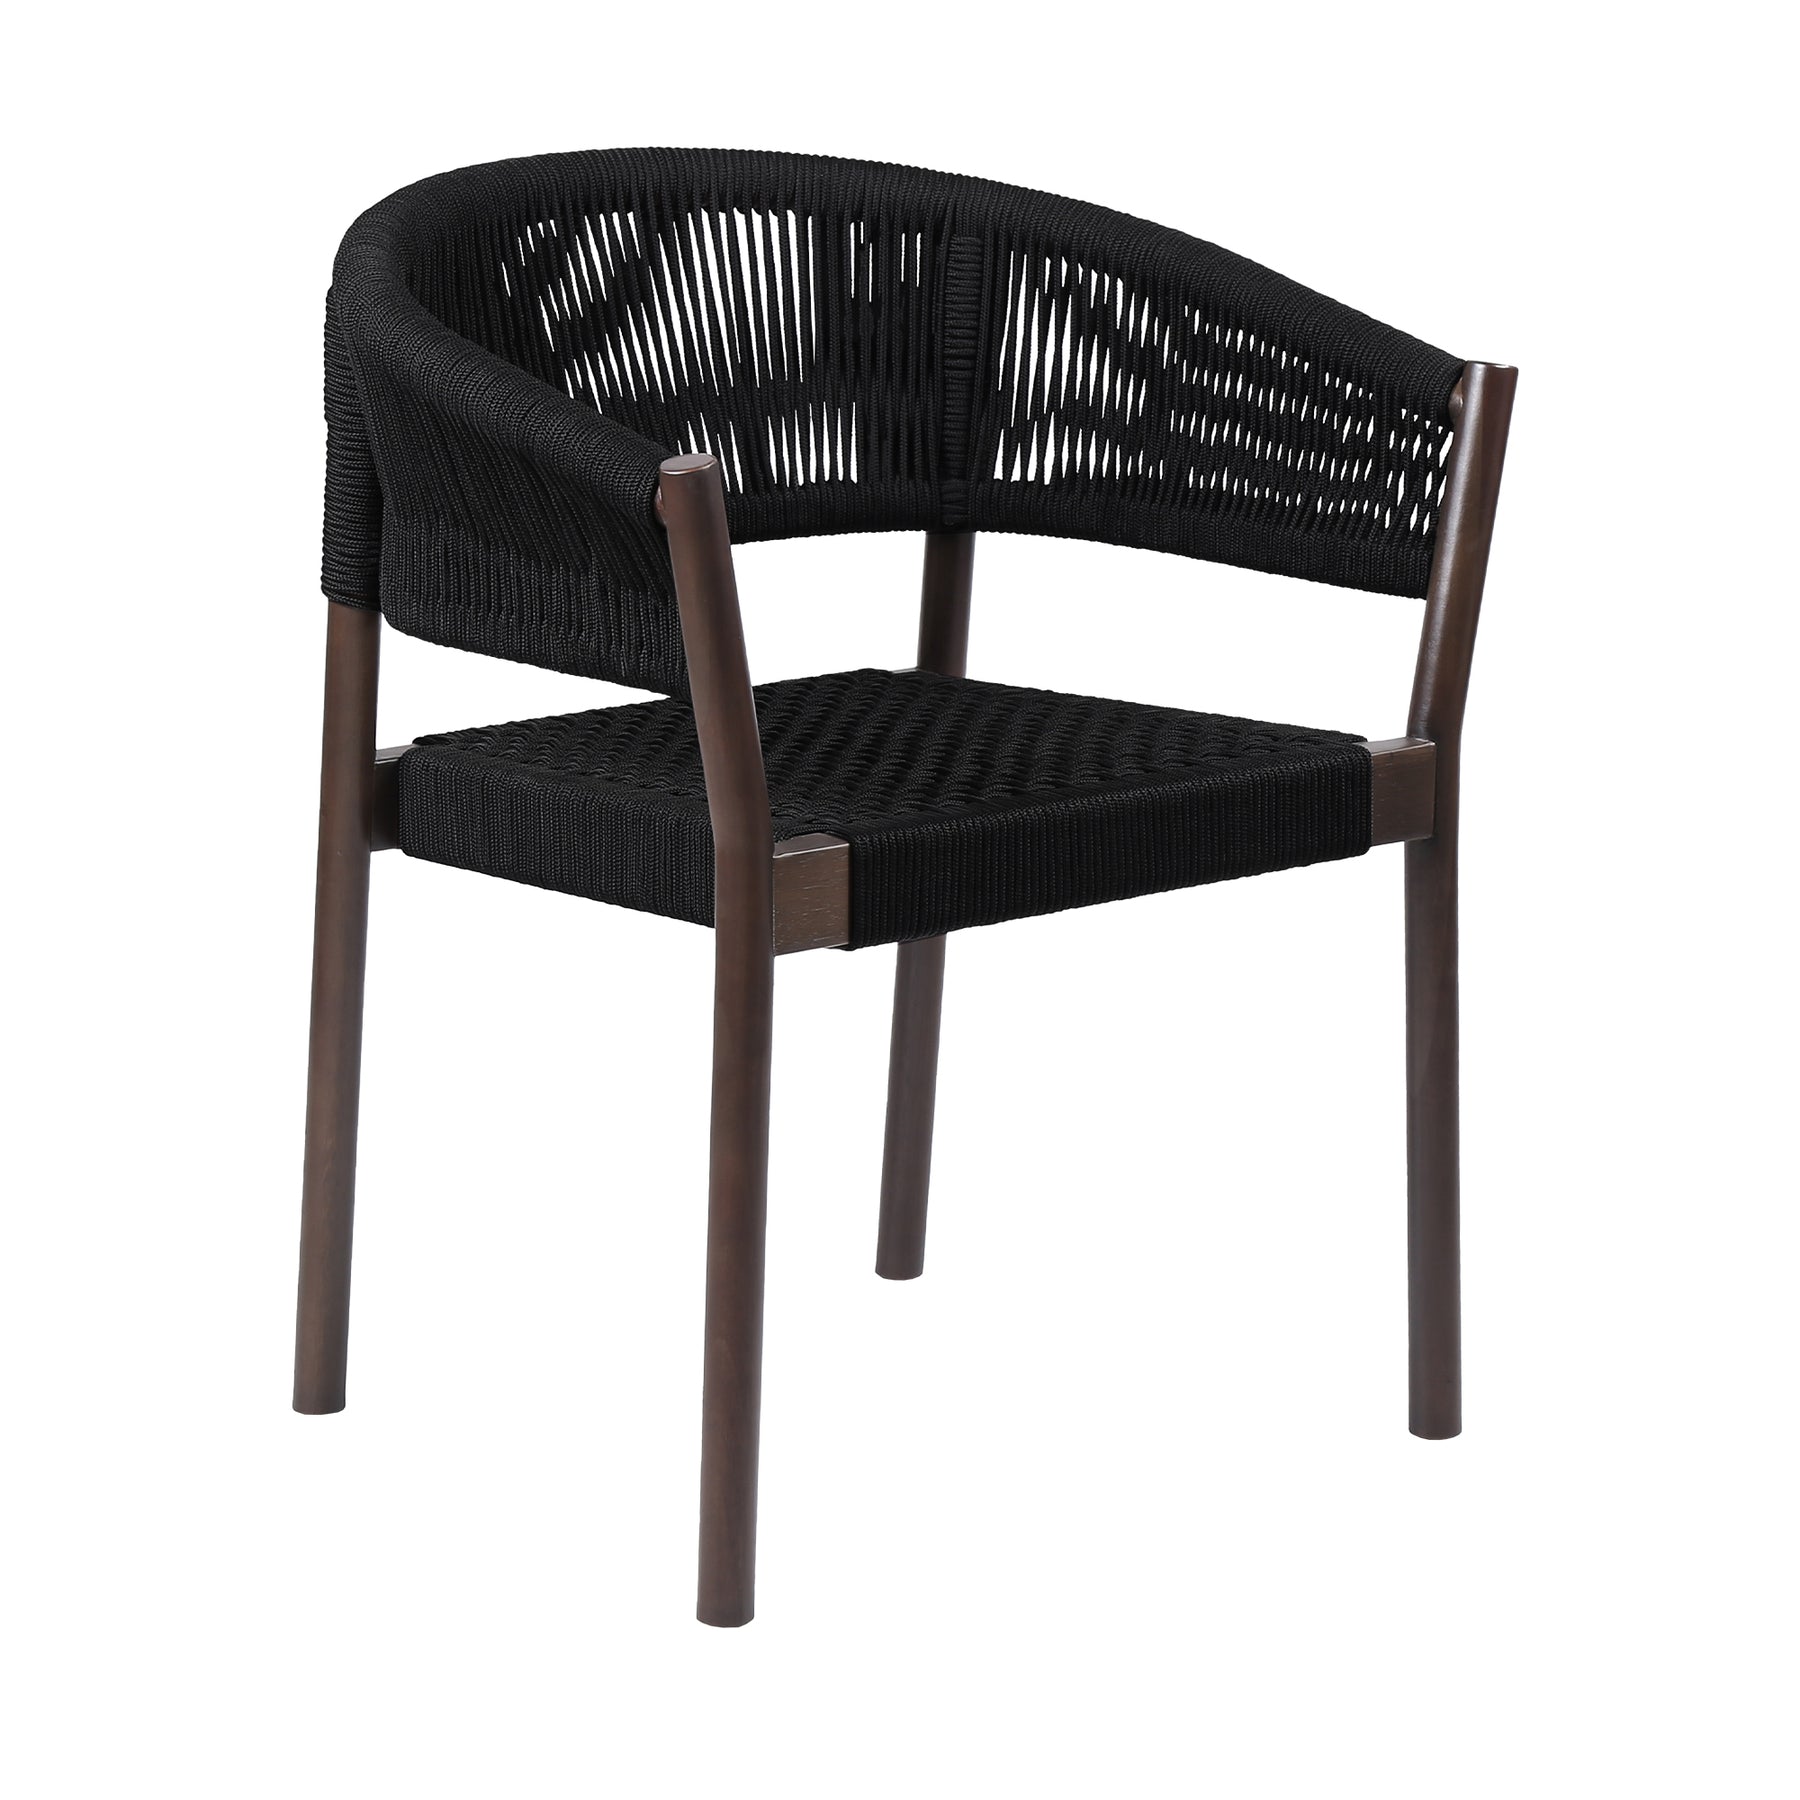 Doris outdoor dining chair set of 2, light/charcoal